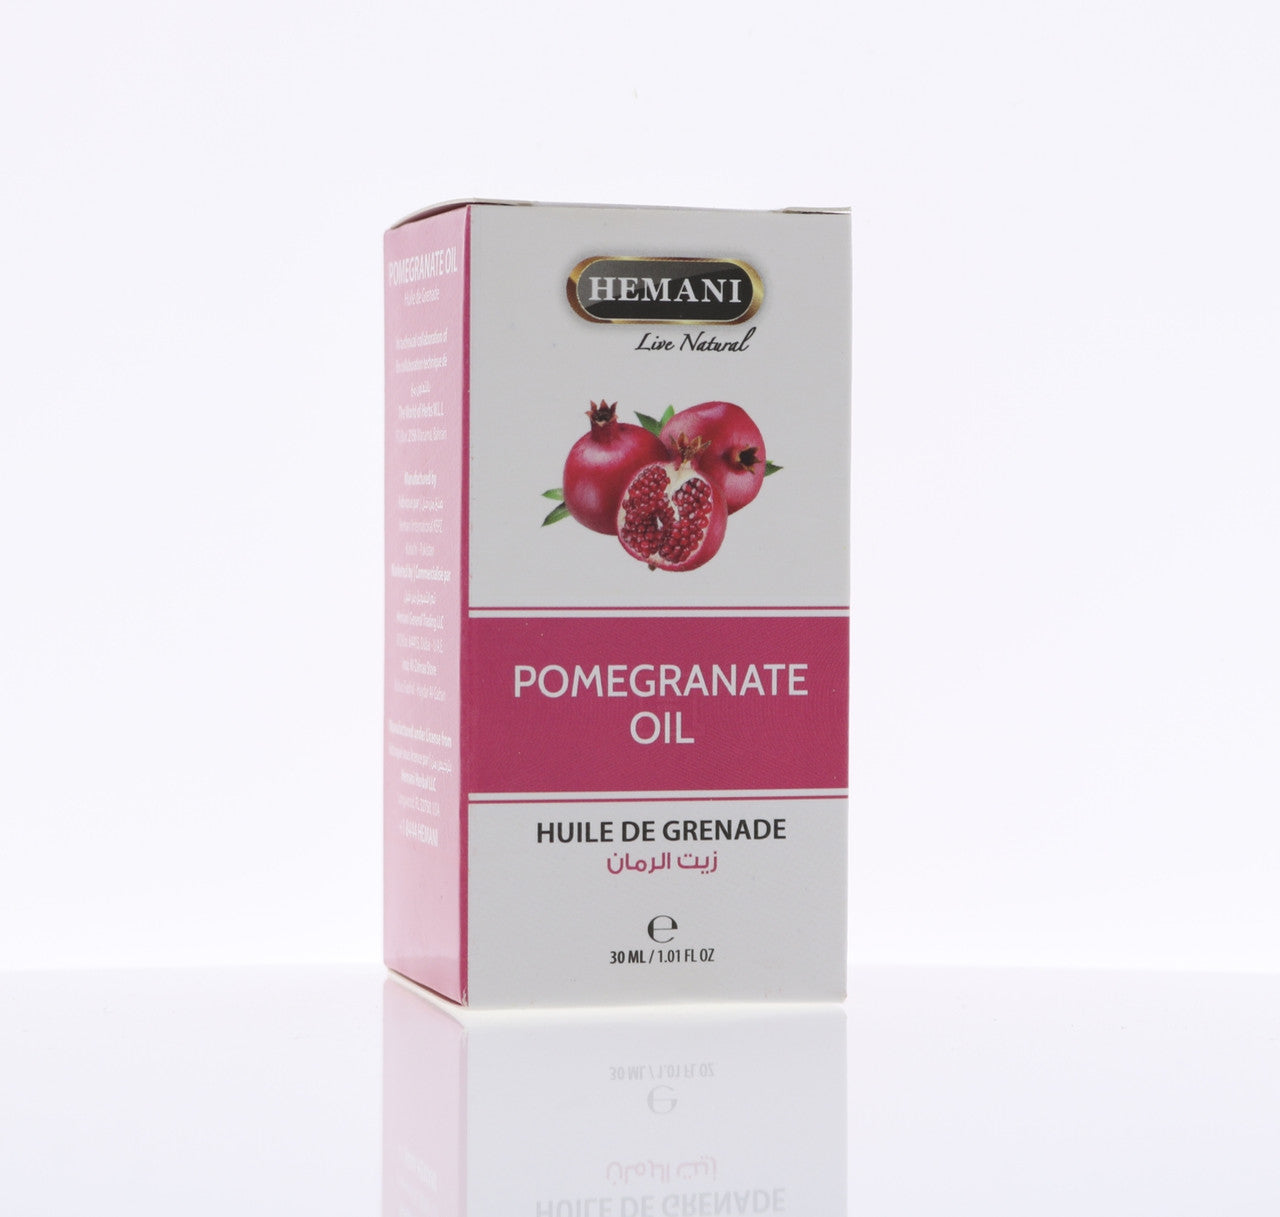 Hemani Pomegranate Oil, 30 ml